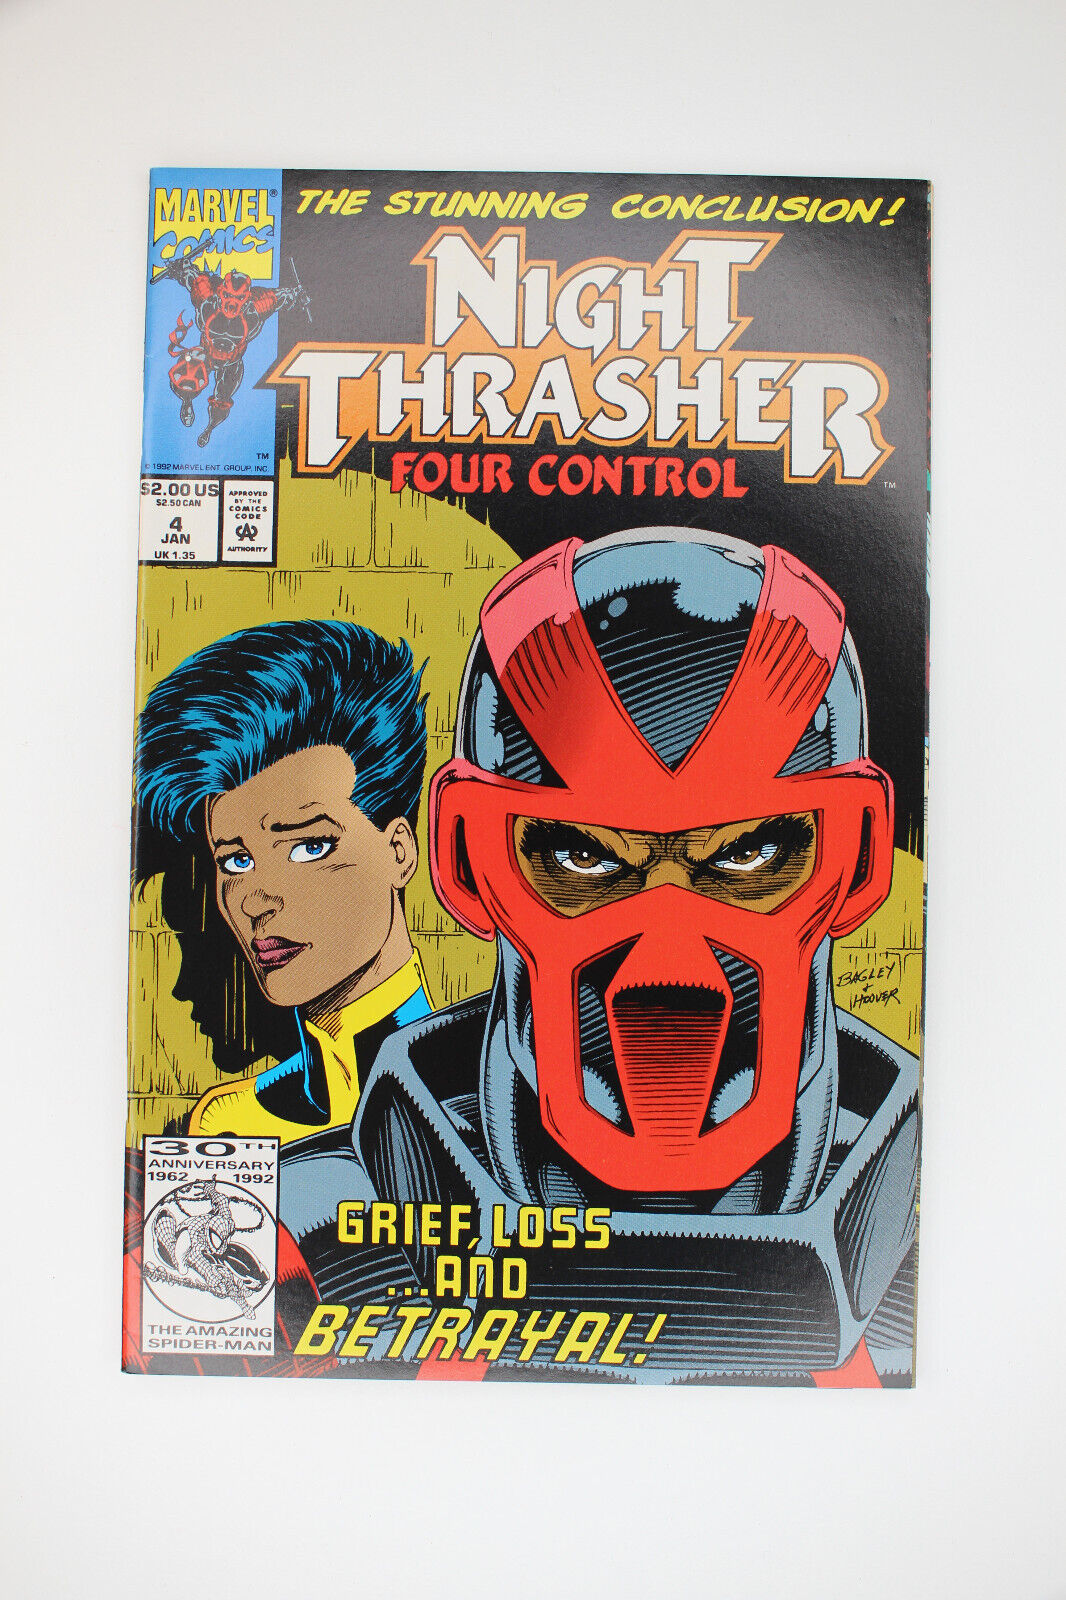 Night Thrasher #4 (Jan 1993 Marvel) Four Control